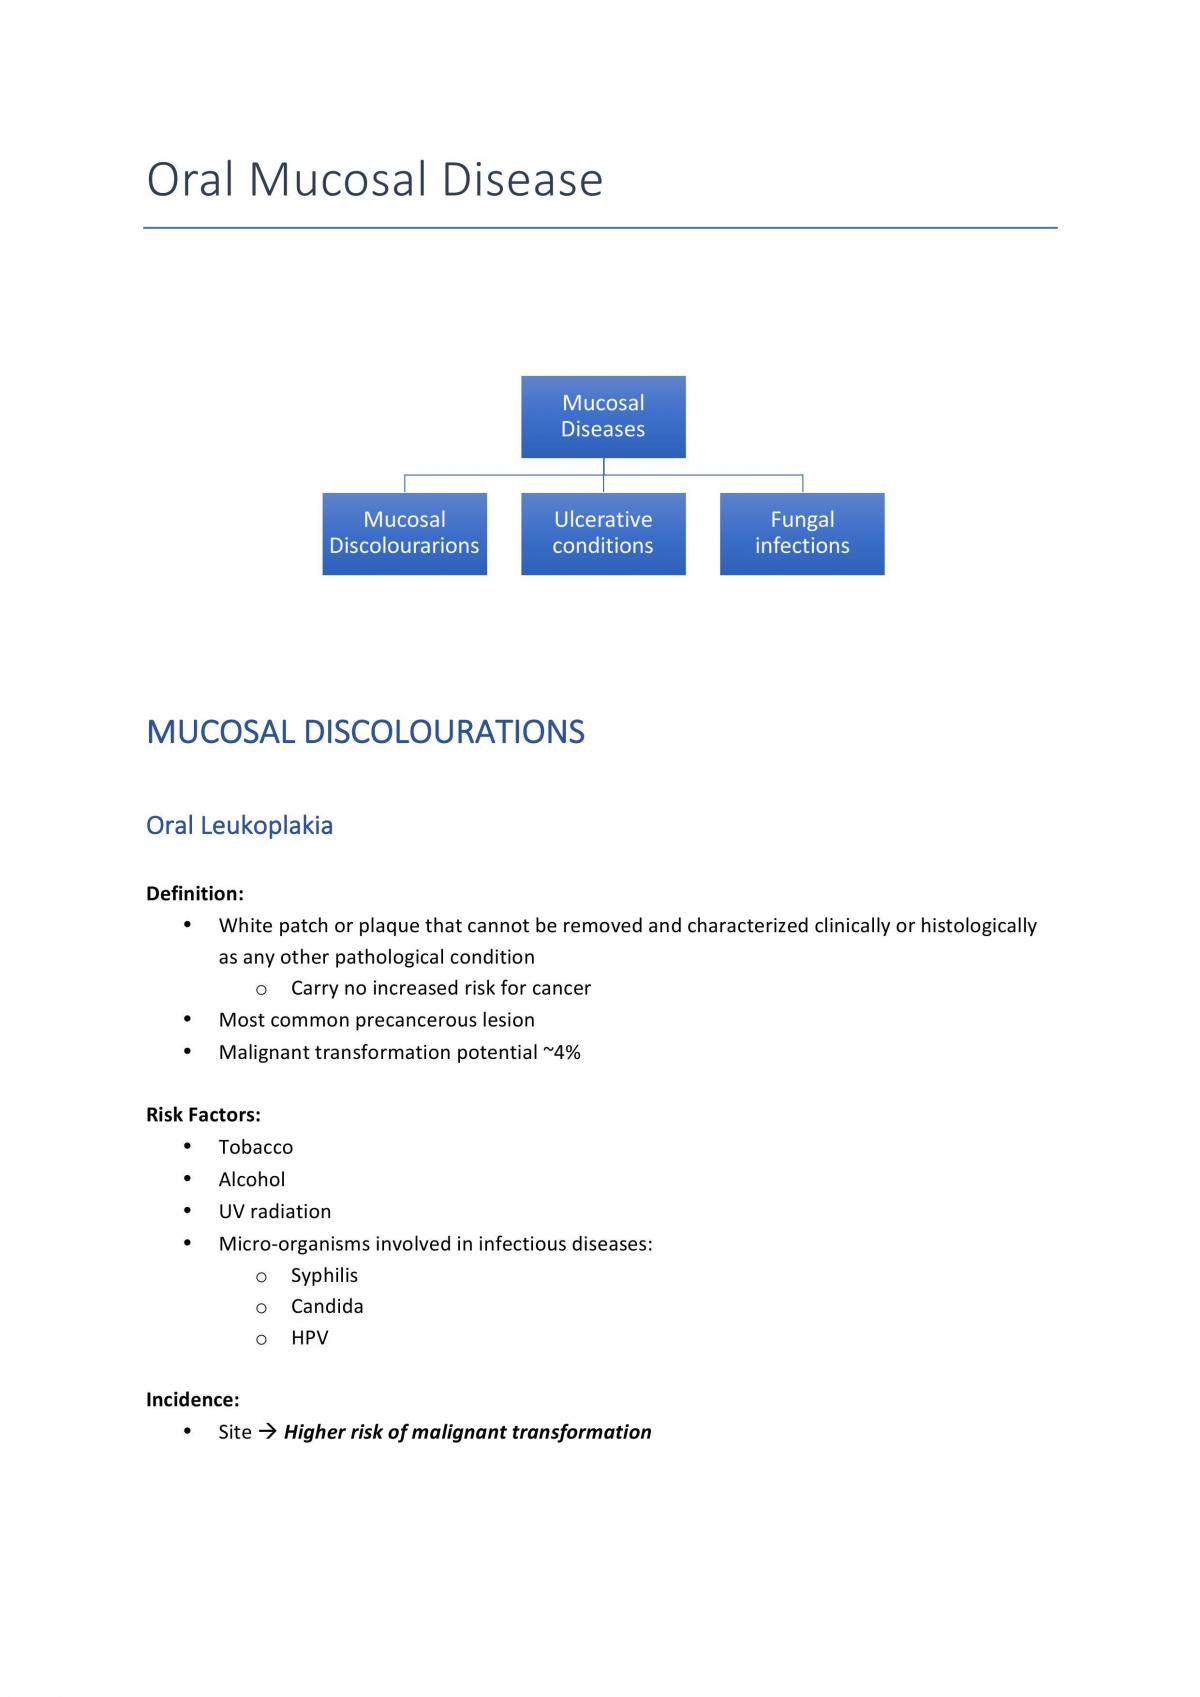 Oral Mucosal Disease - Page 1